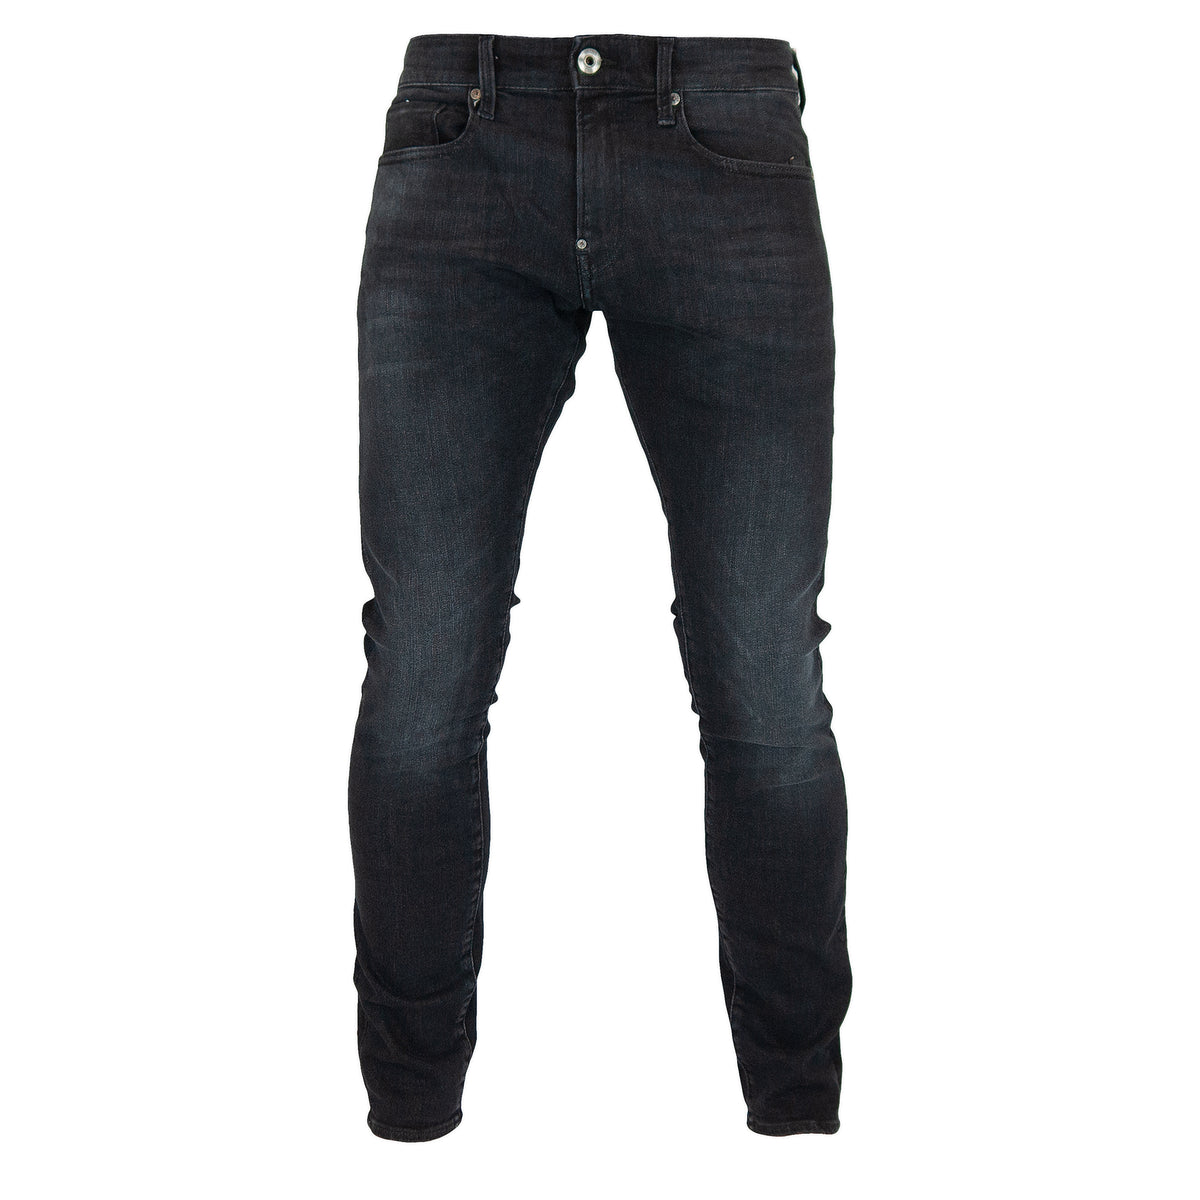 Medium Aged - Skinny G-Star Faded Jeans Revend Black Superstretch Elto